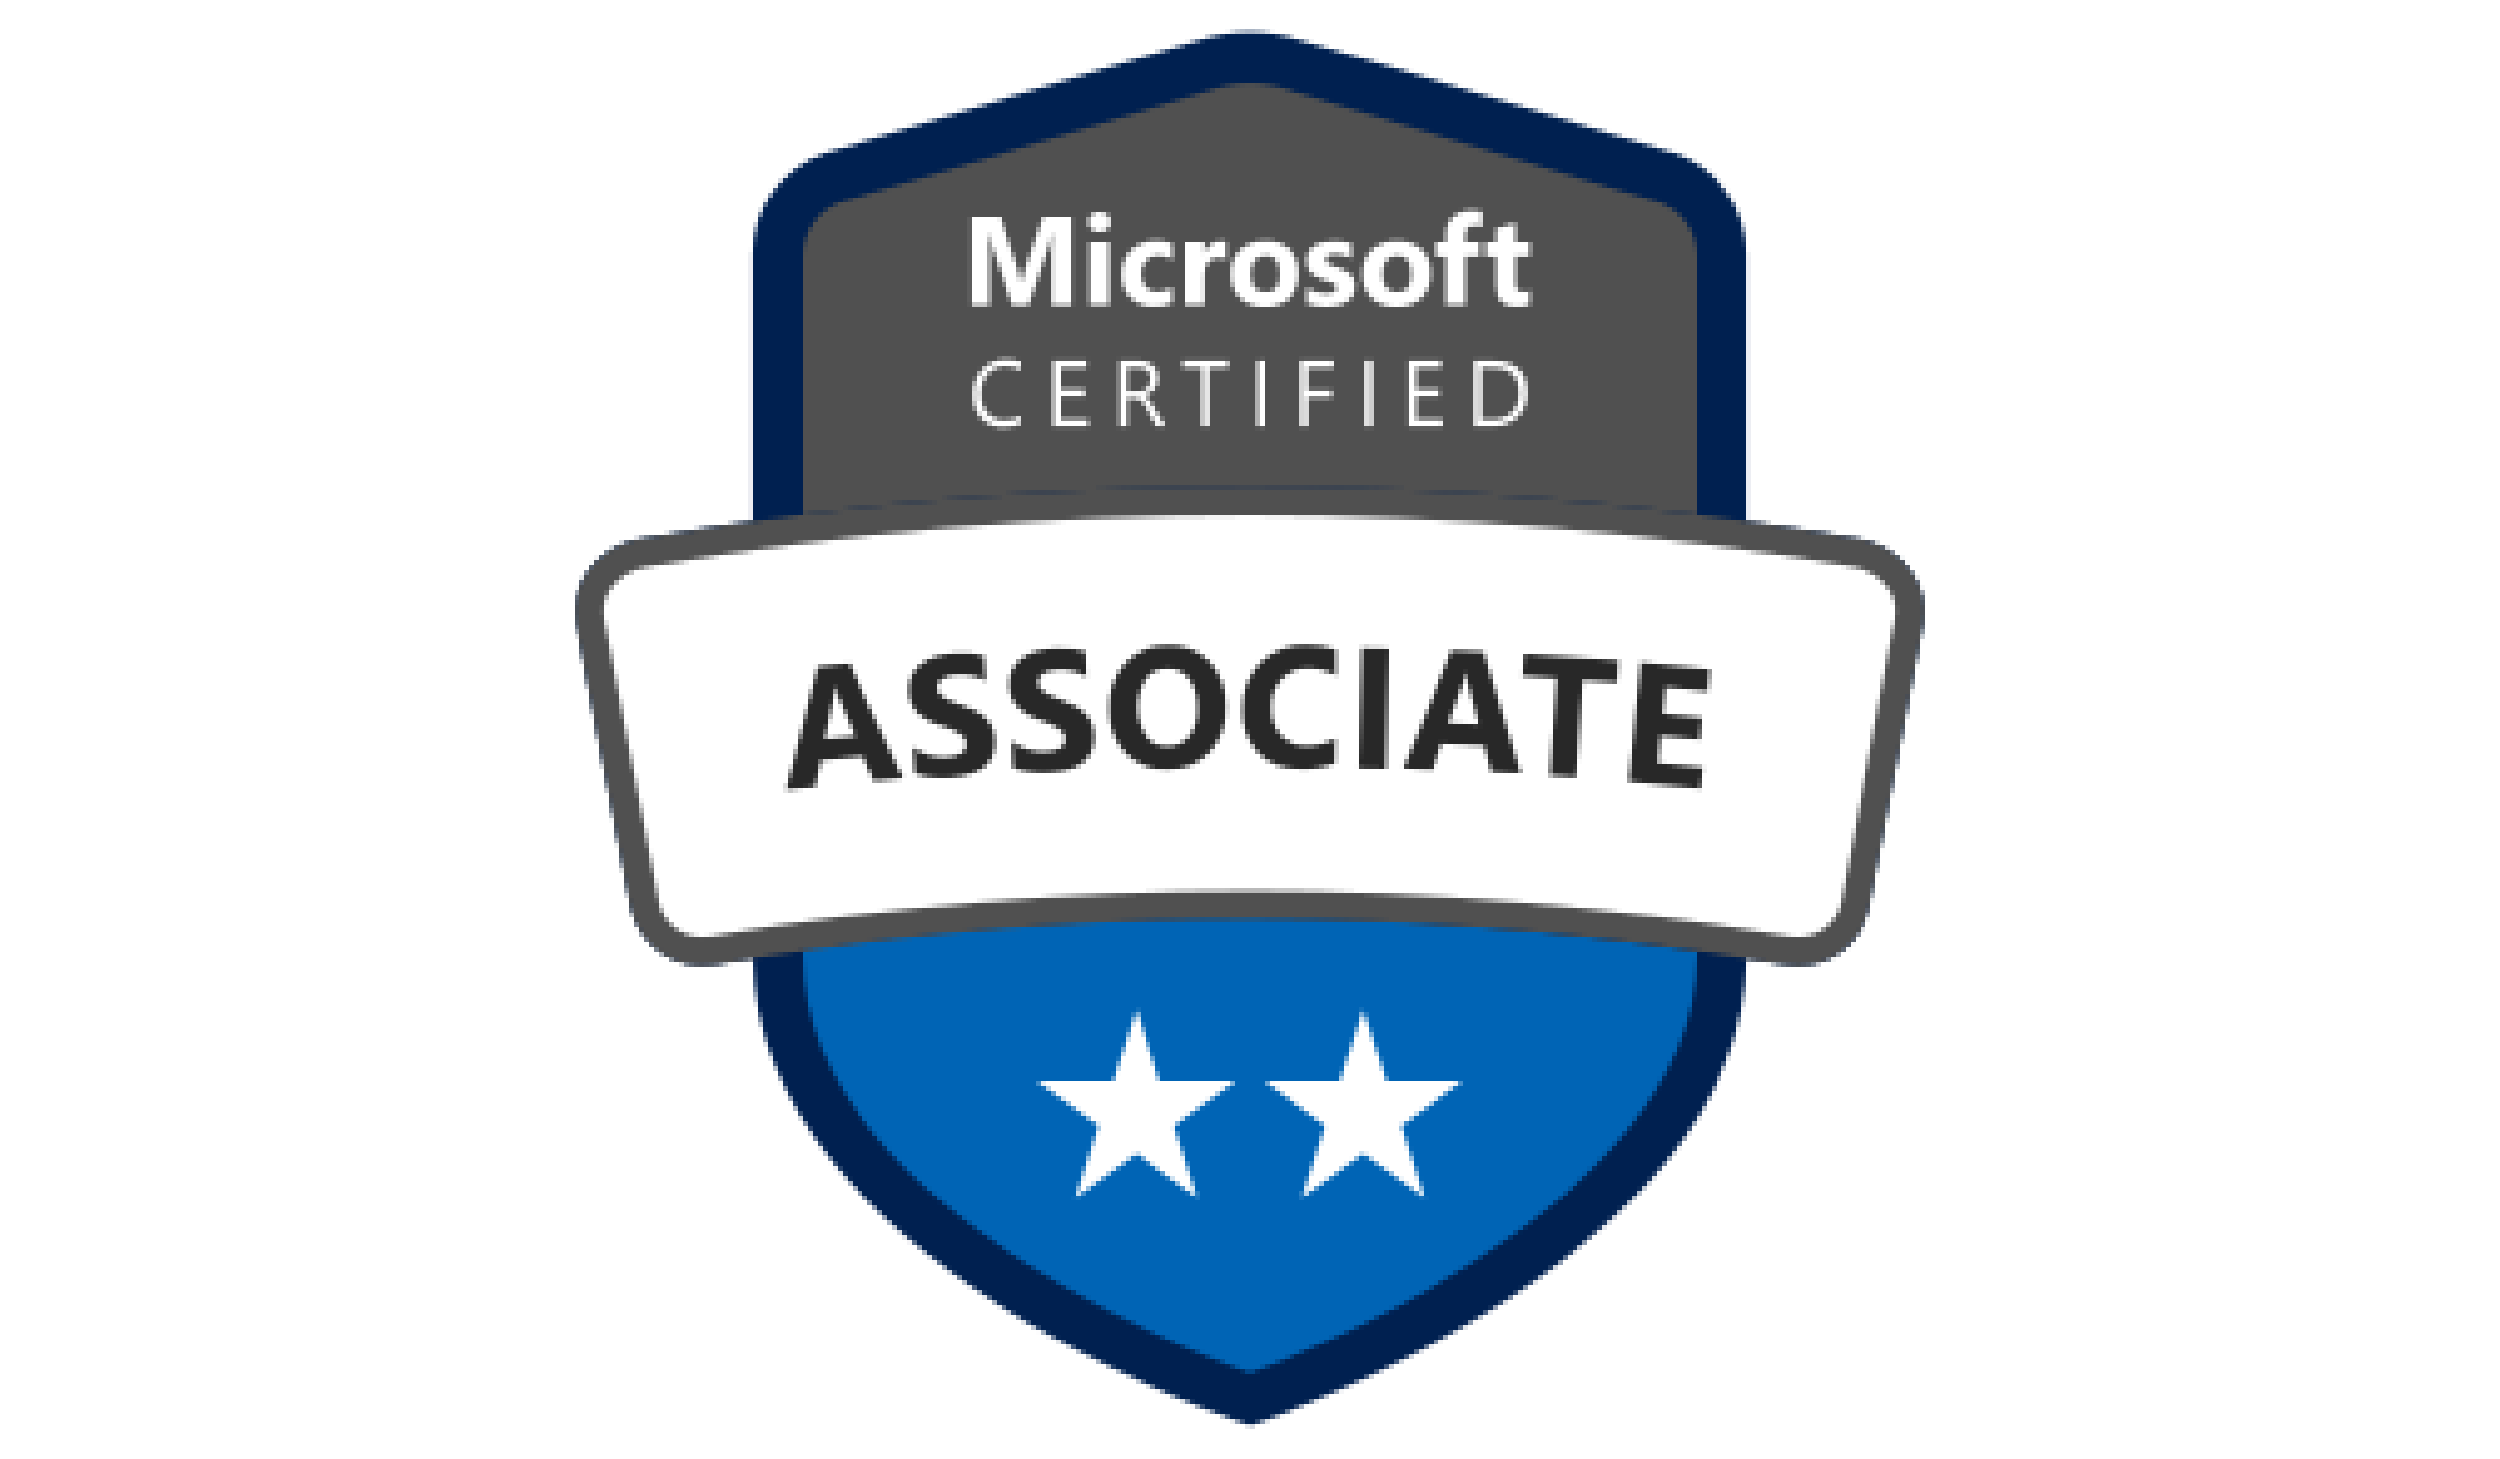 microsoft-certified-associate-badge